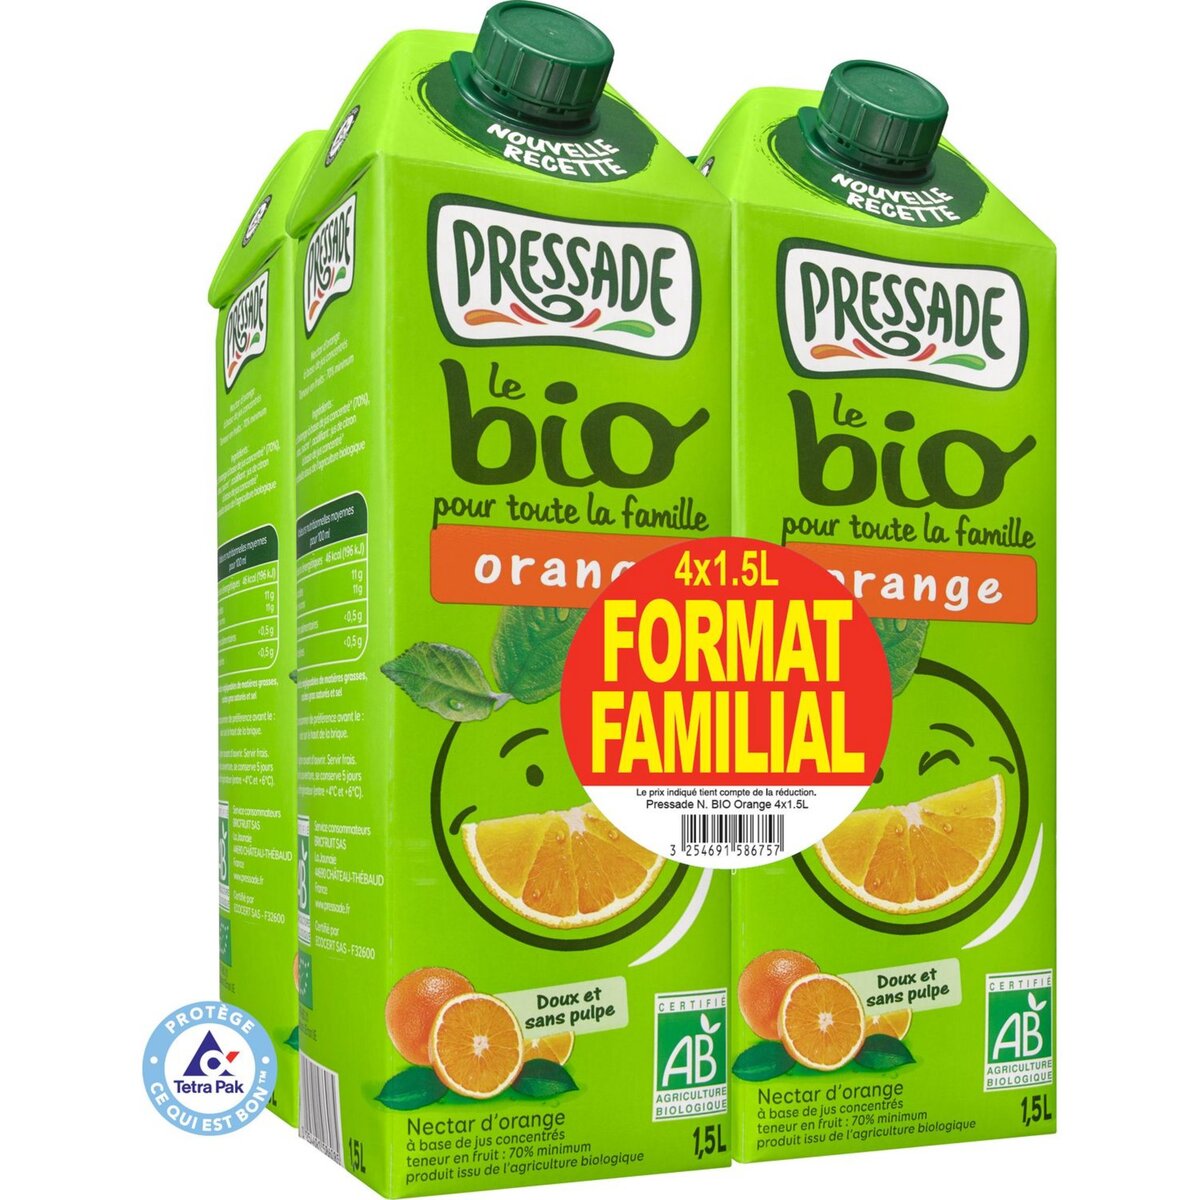 PRESSADE Pressade nectar d'orange bio 4x1,5l format familial 4x1,5l